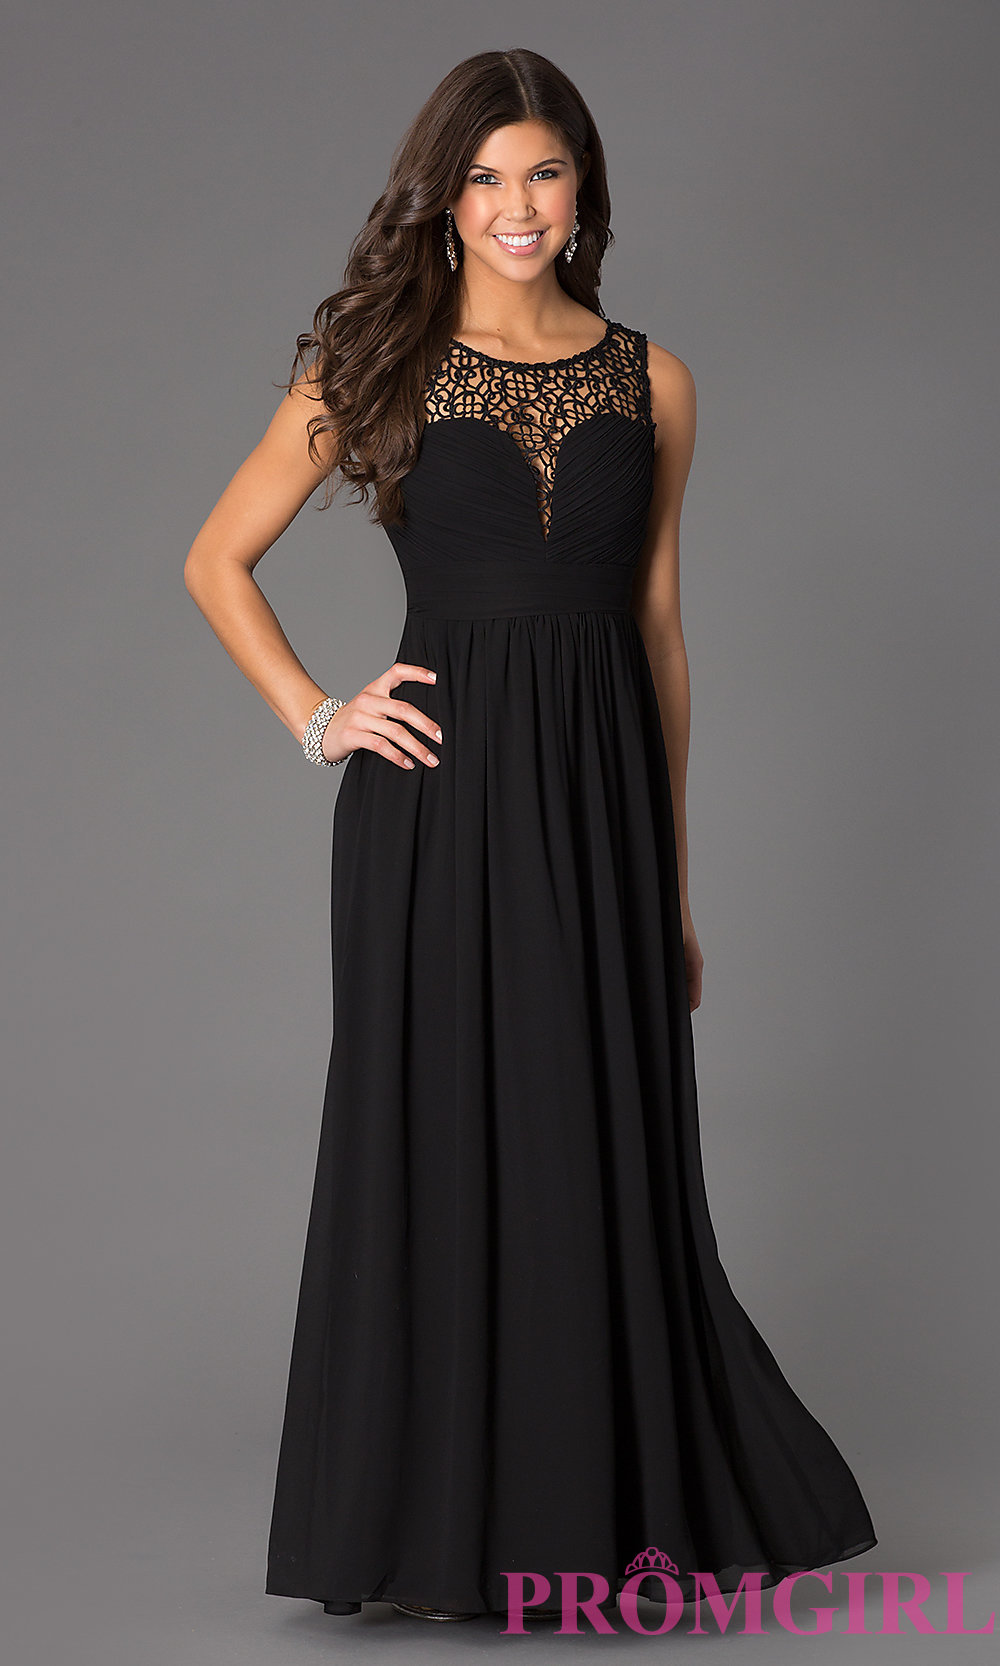 Black Simple Formal Dress & Online Fashion Review - Dresses Ask